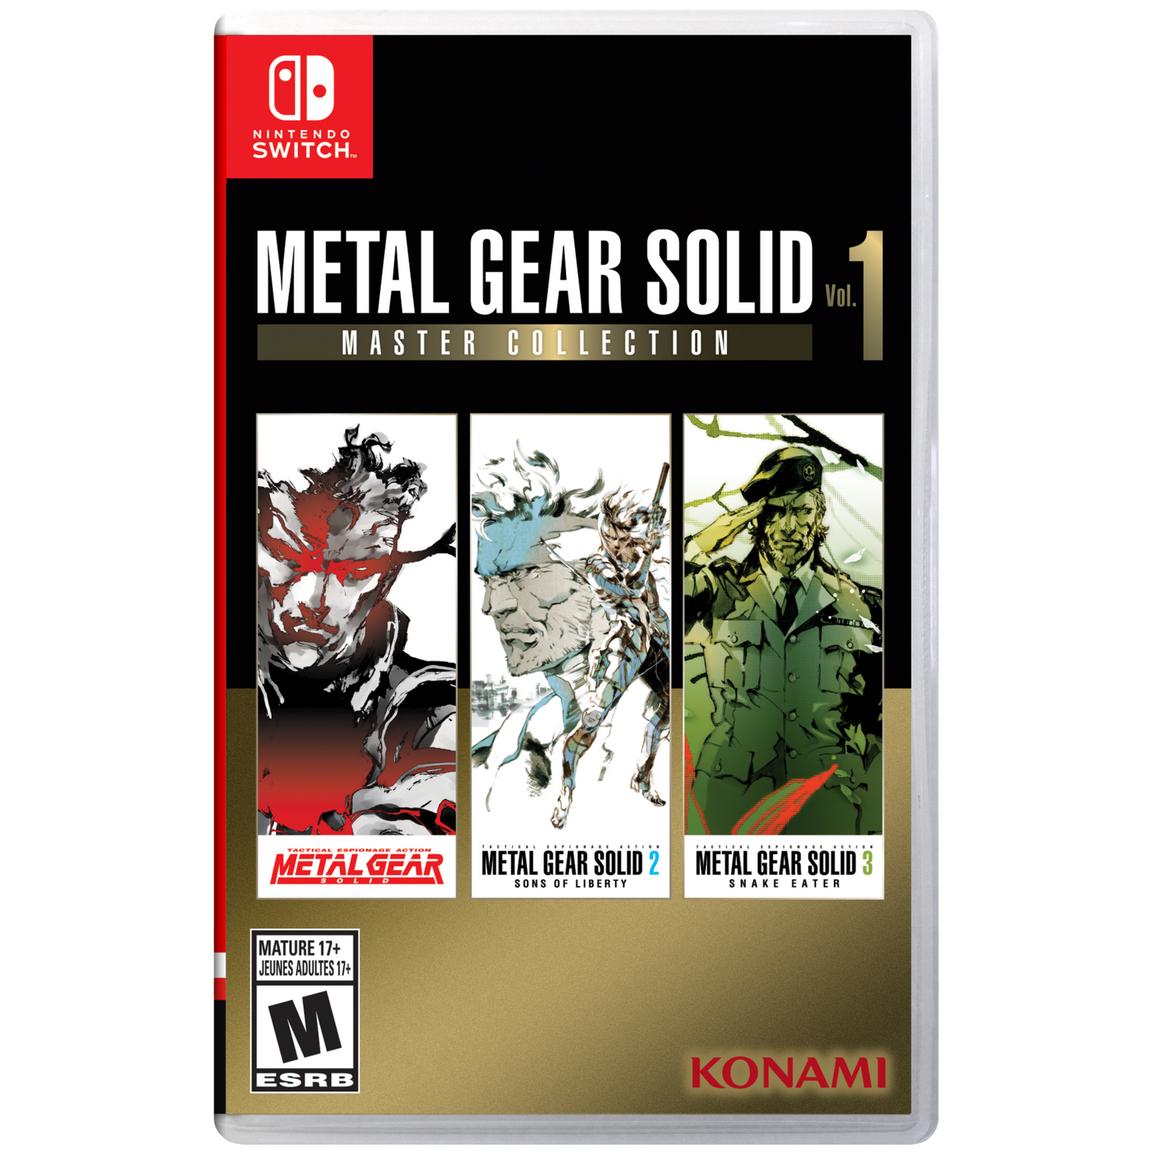 Видеоигра Metal Gear Solid: Master Collection Vol.1 - Nintendo Switch цена и фото